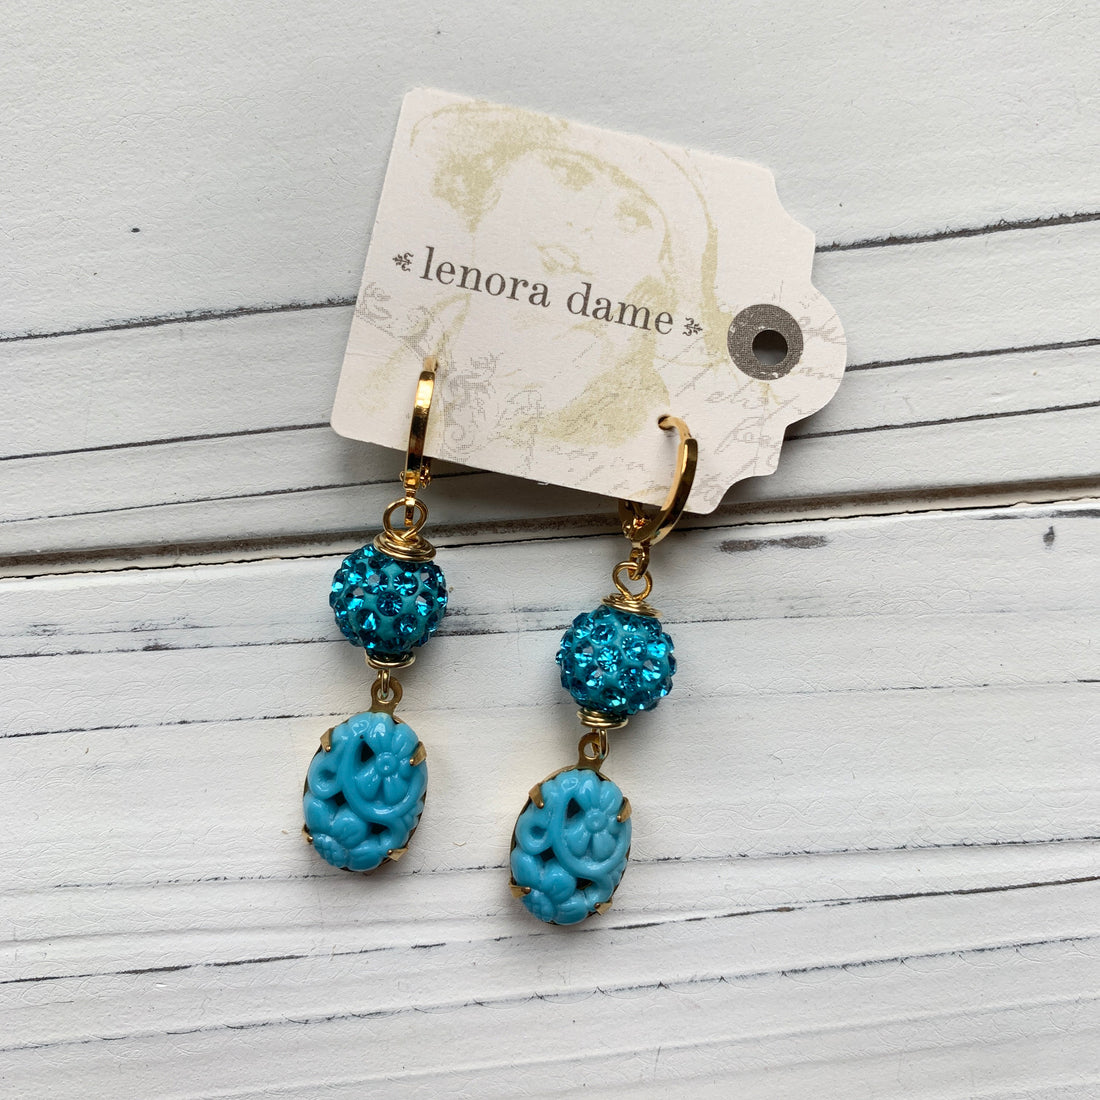 Lenora Dame Vintage Turquoise Resin Drop Earrings